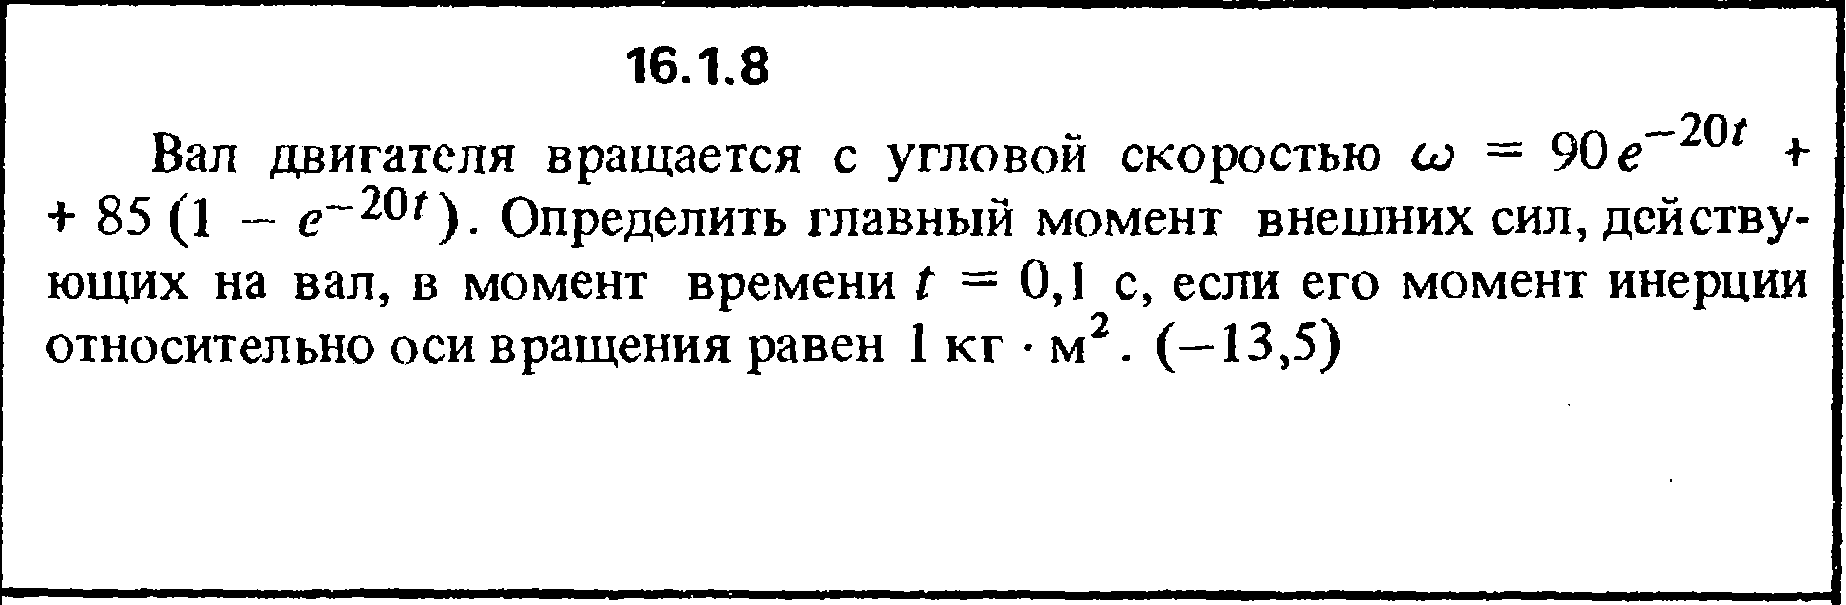 Решение задачи 16.1.8 из сборника Кепе О.Е. 1989 года